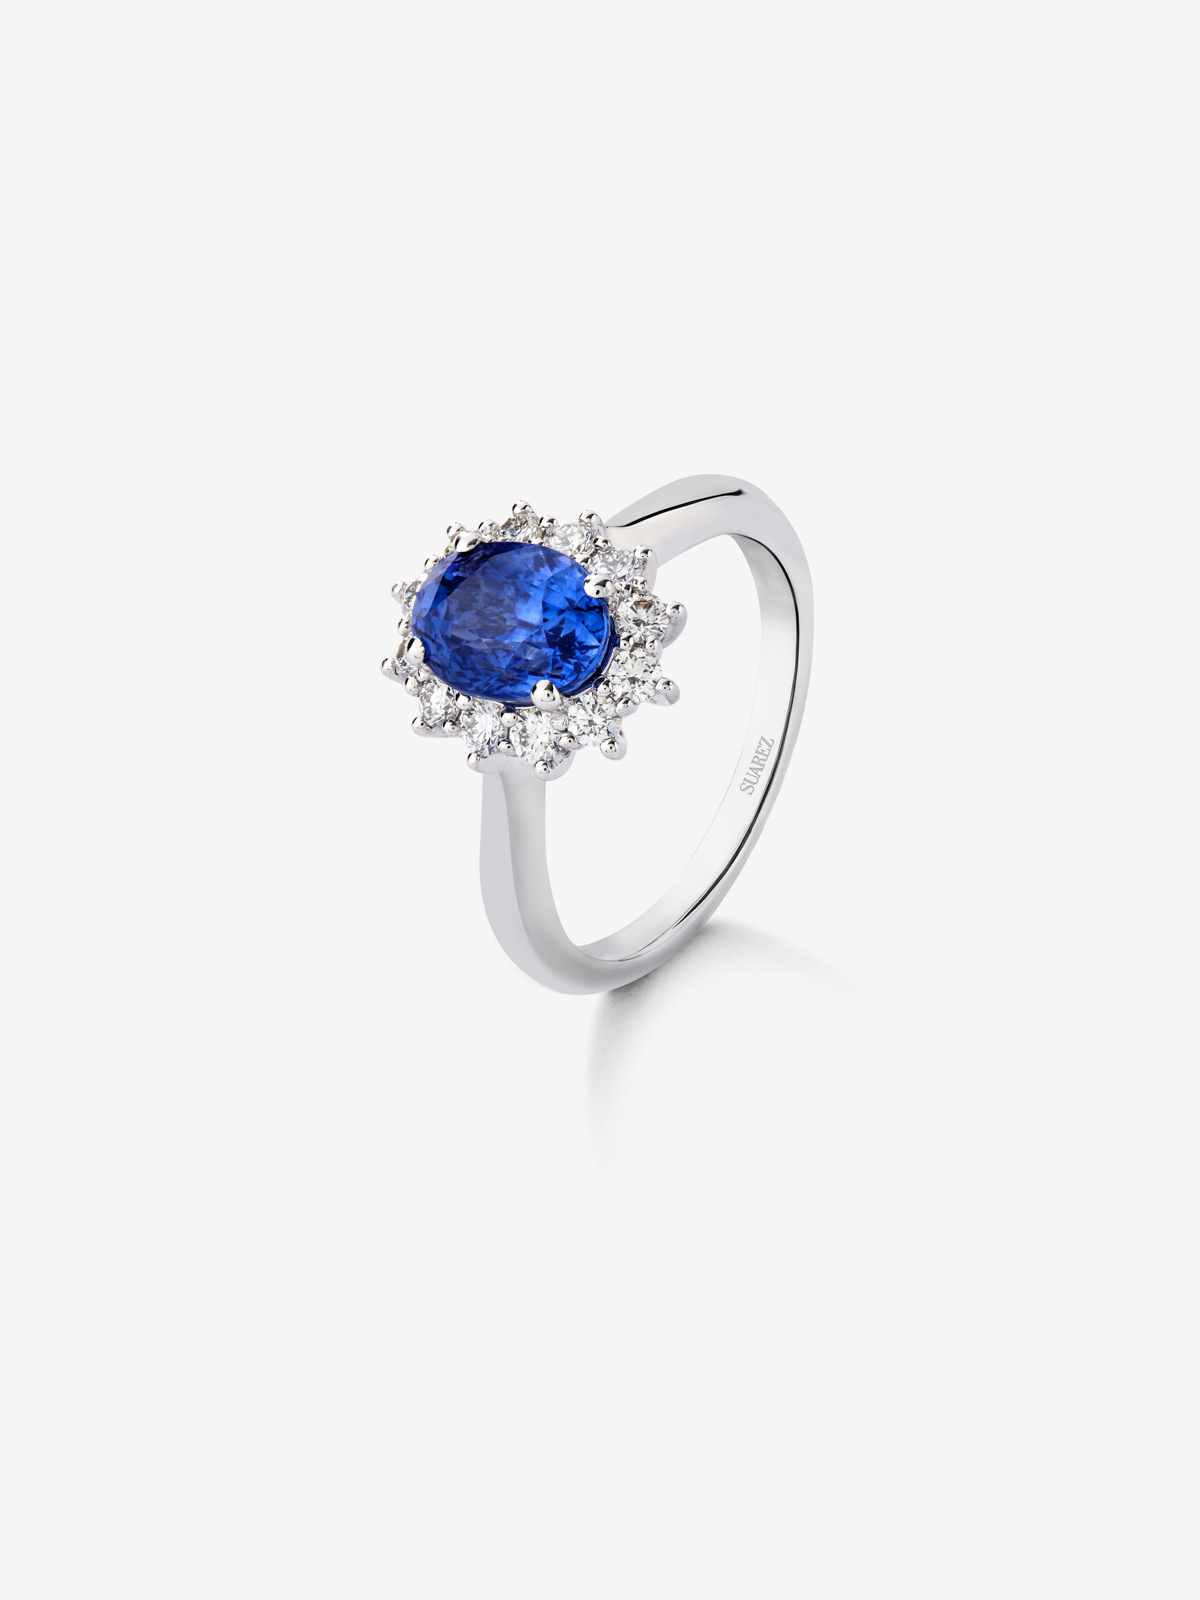 18K White Gold Ring with Cornflower Blue Zafir